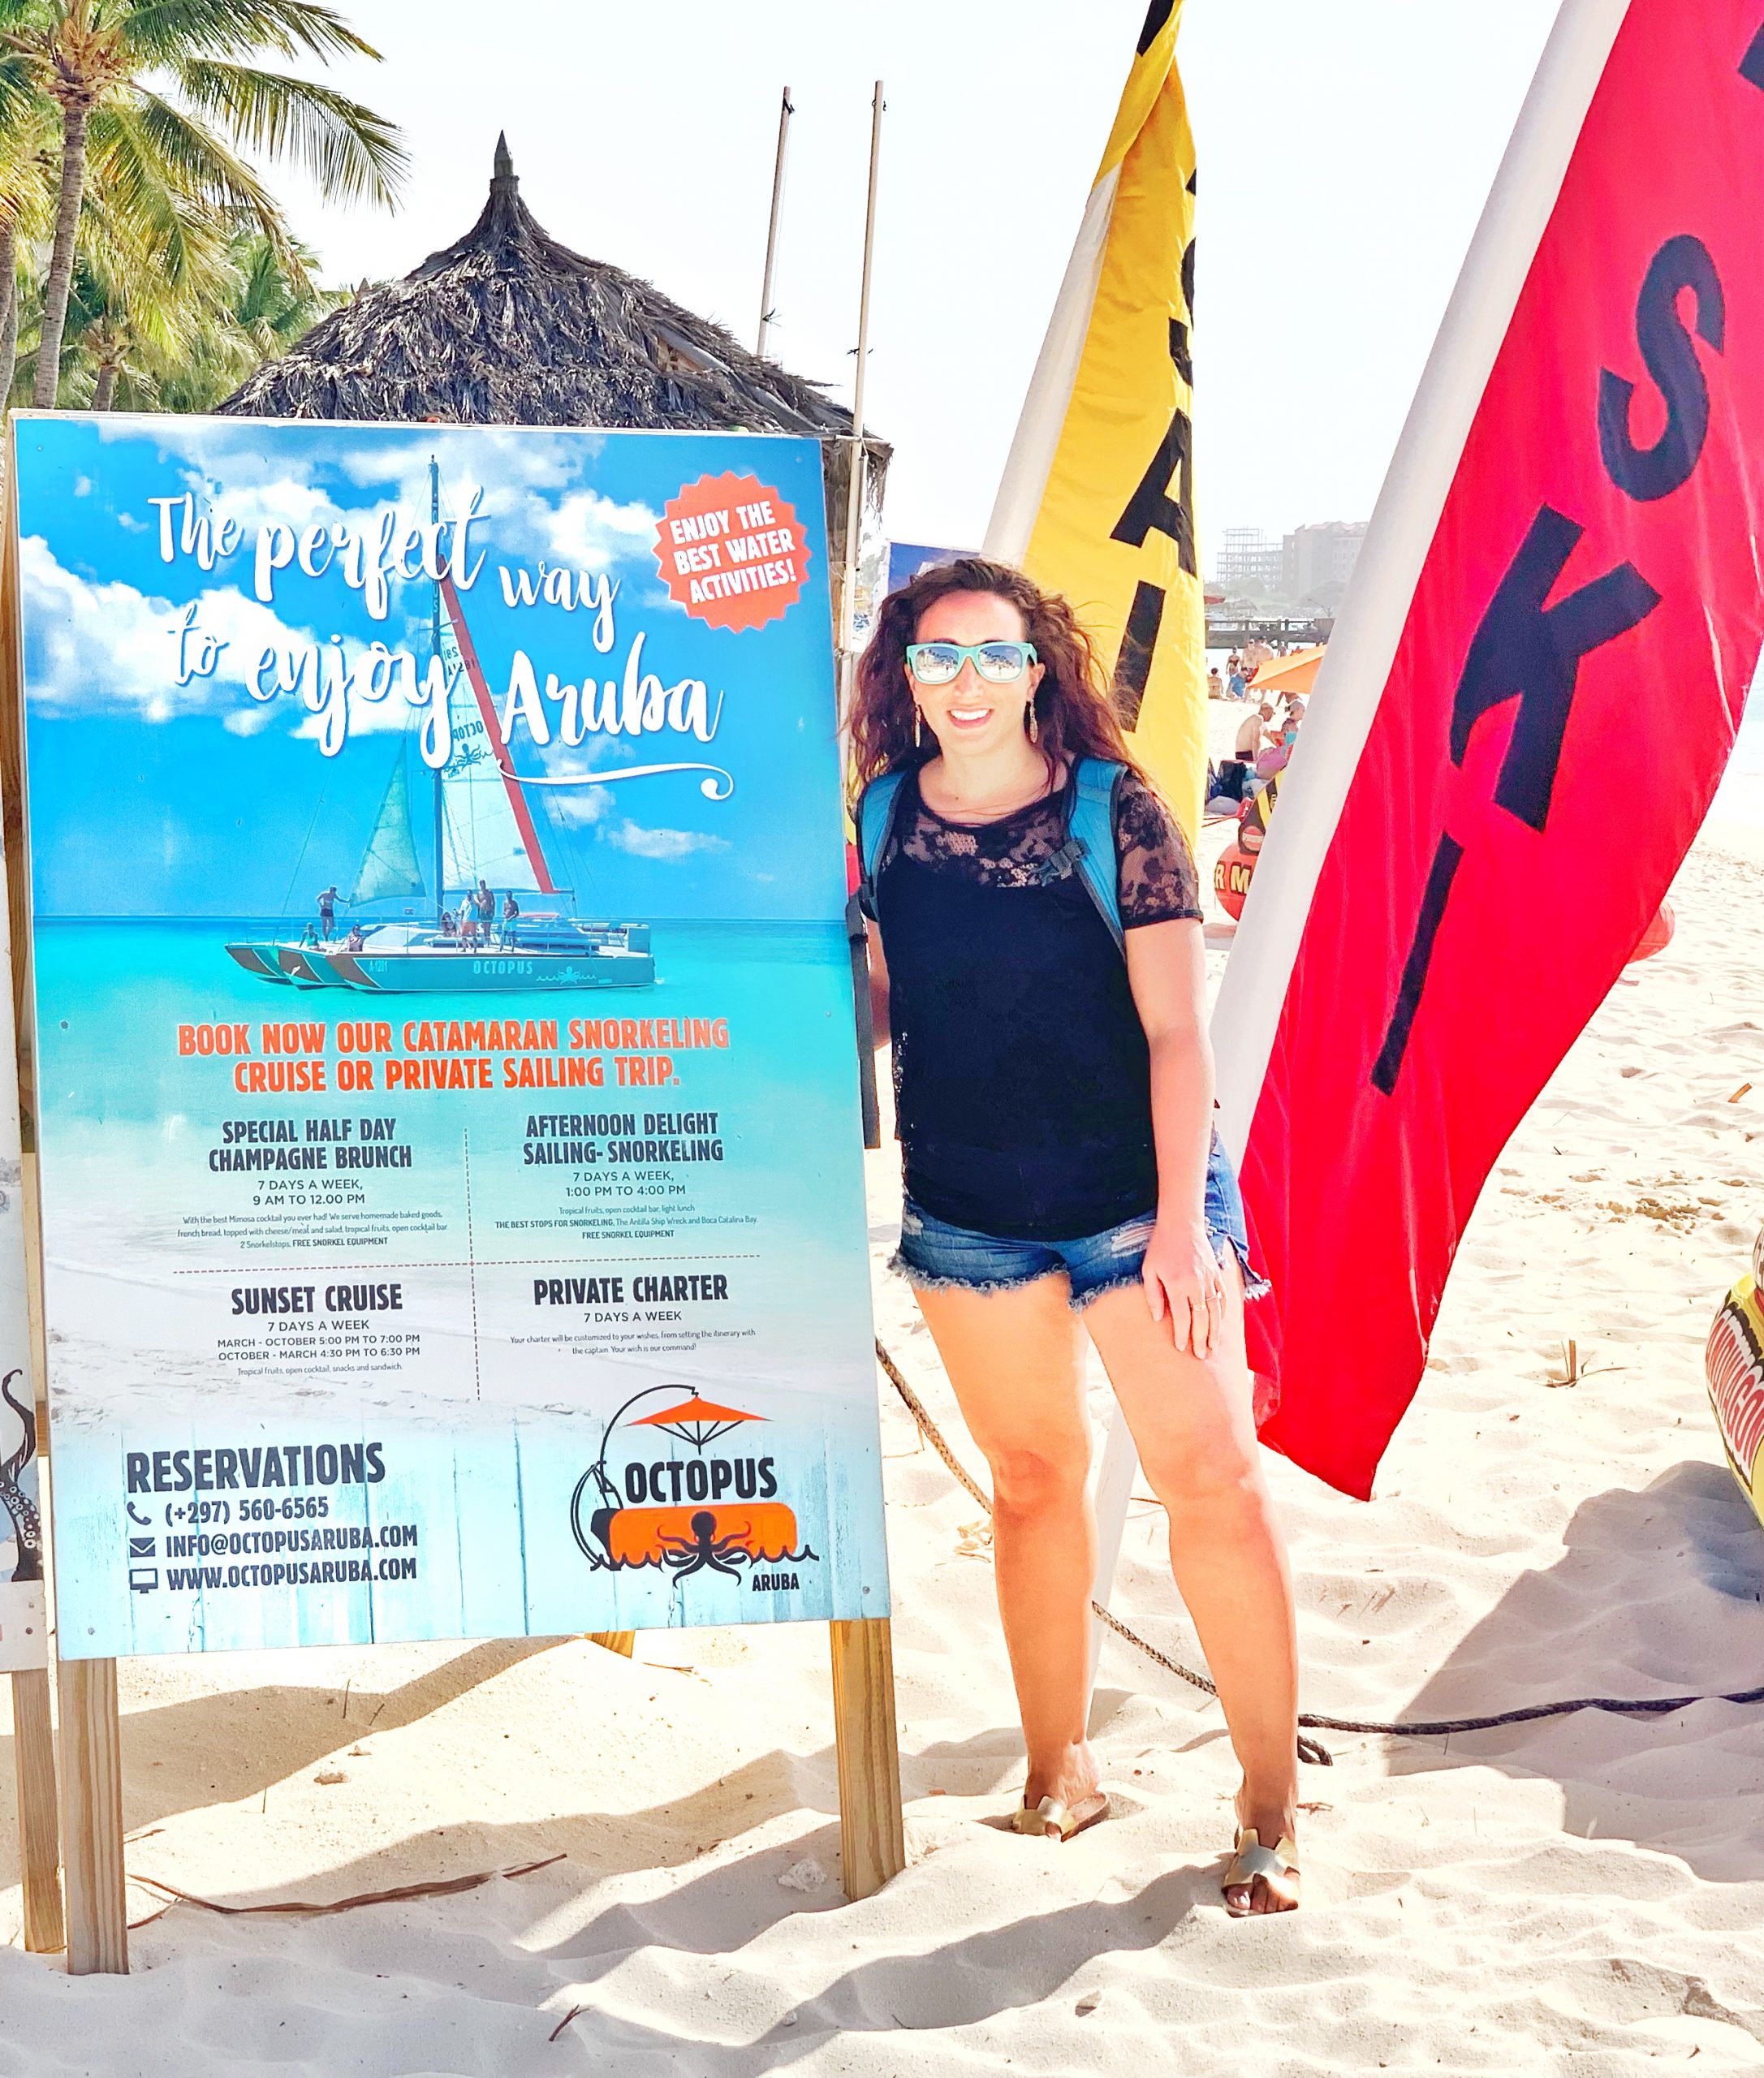 Girl standing next to Octopus Aruba Sailing sign on beach